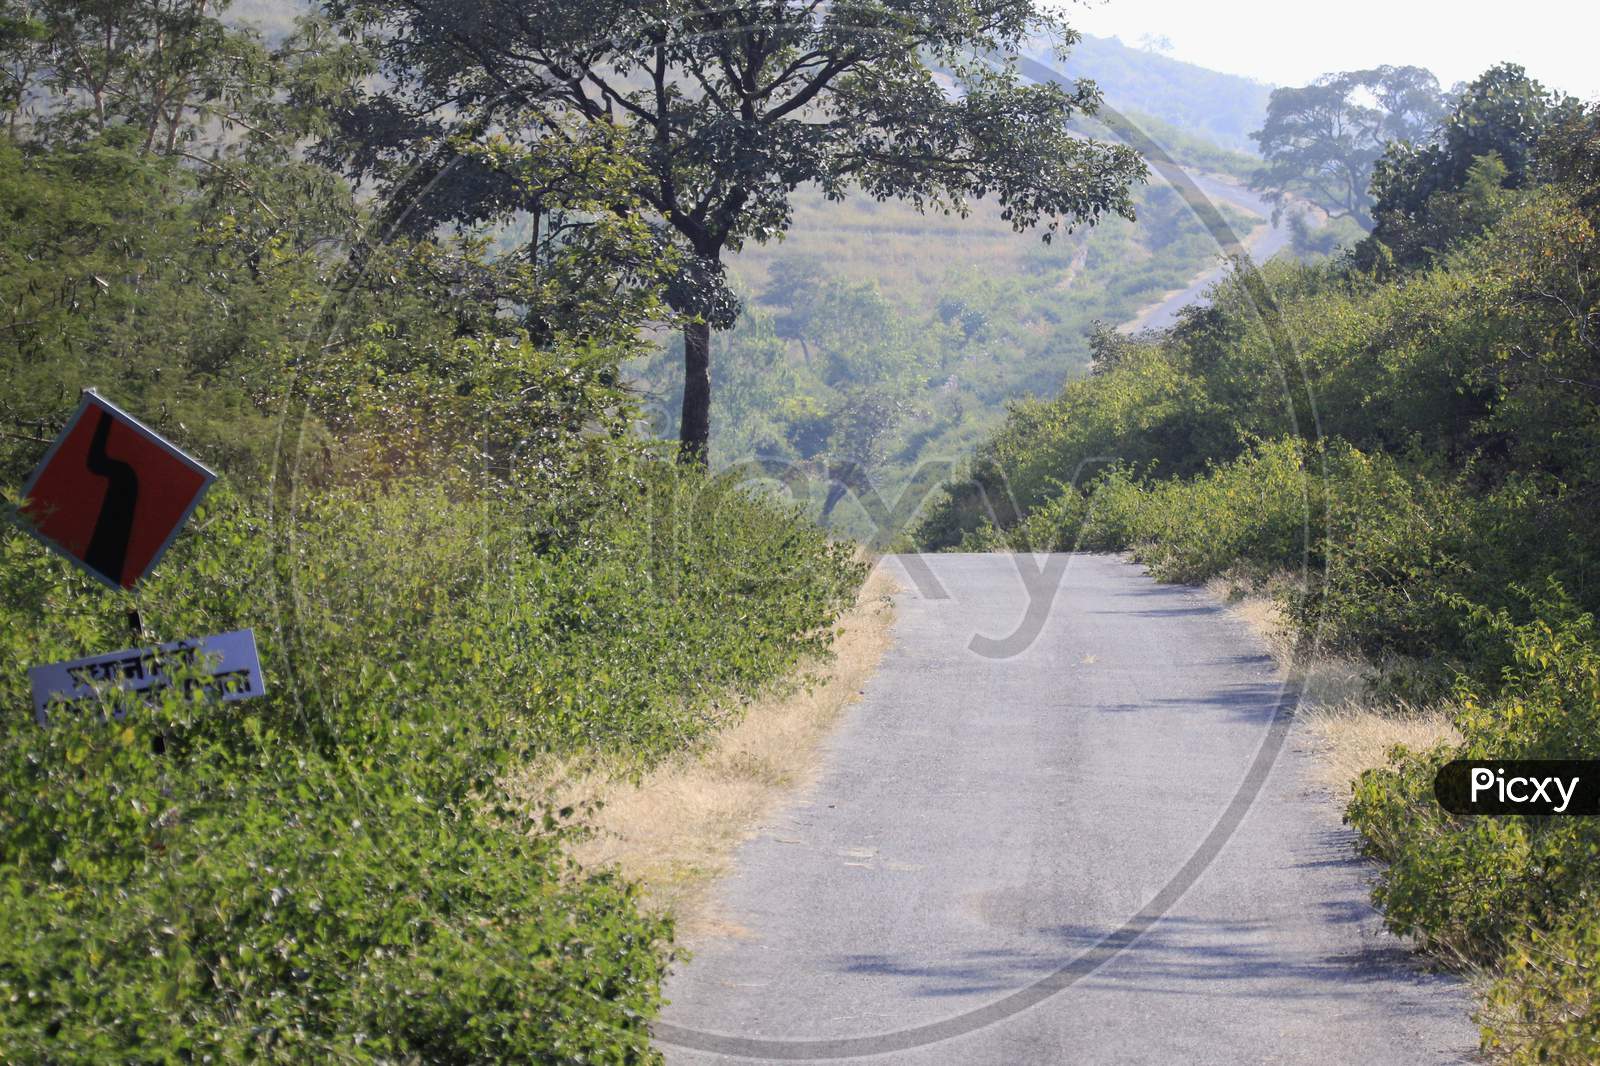 Roads in Indian Rural Villages